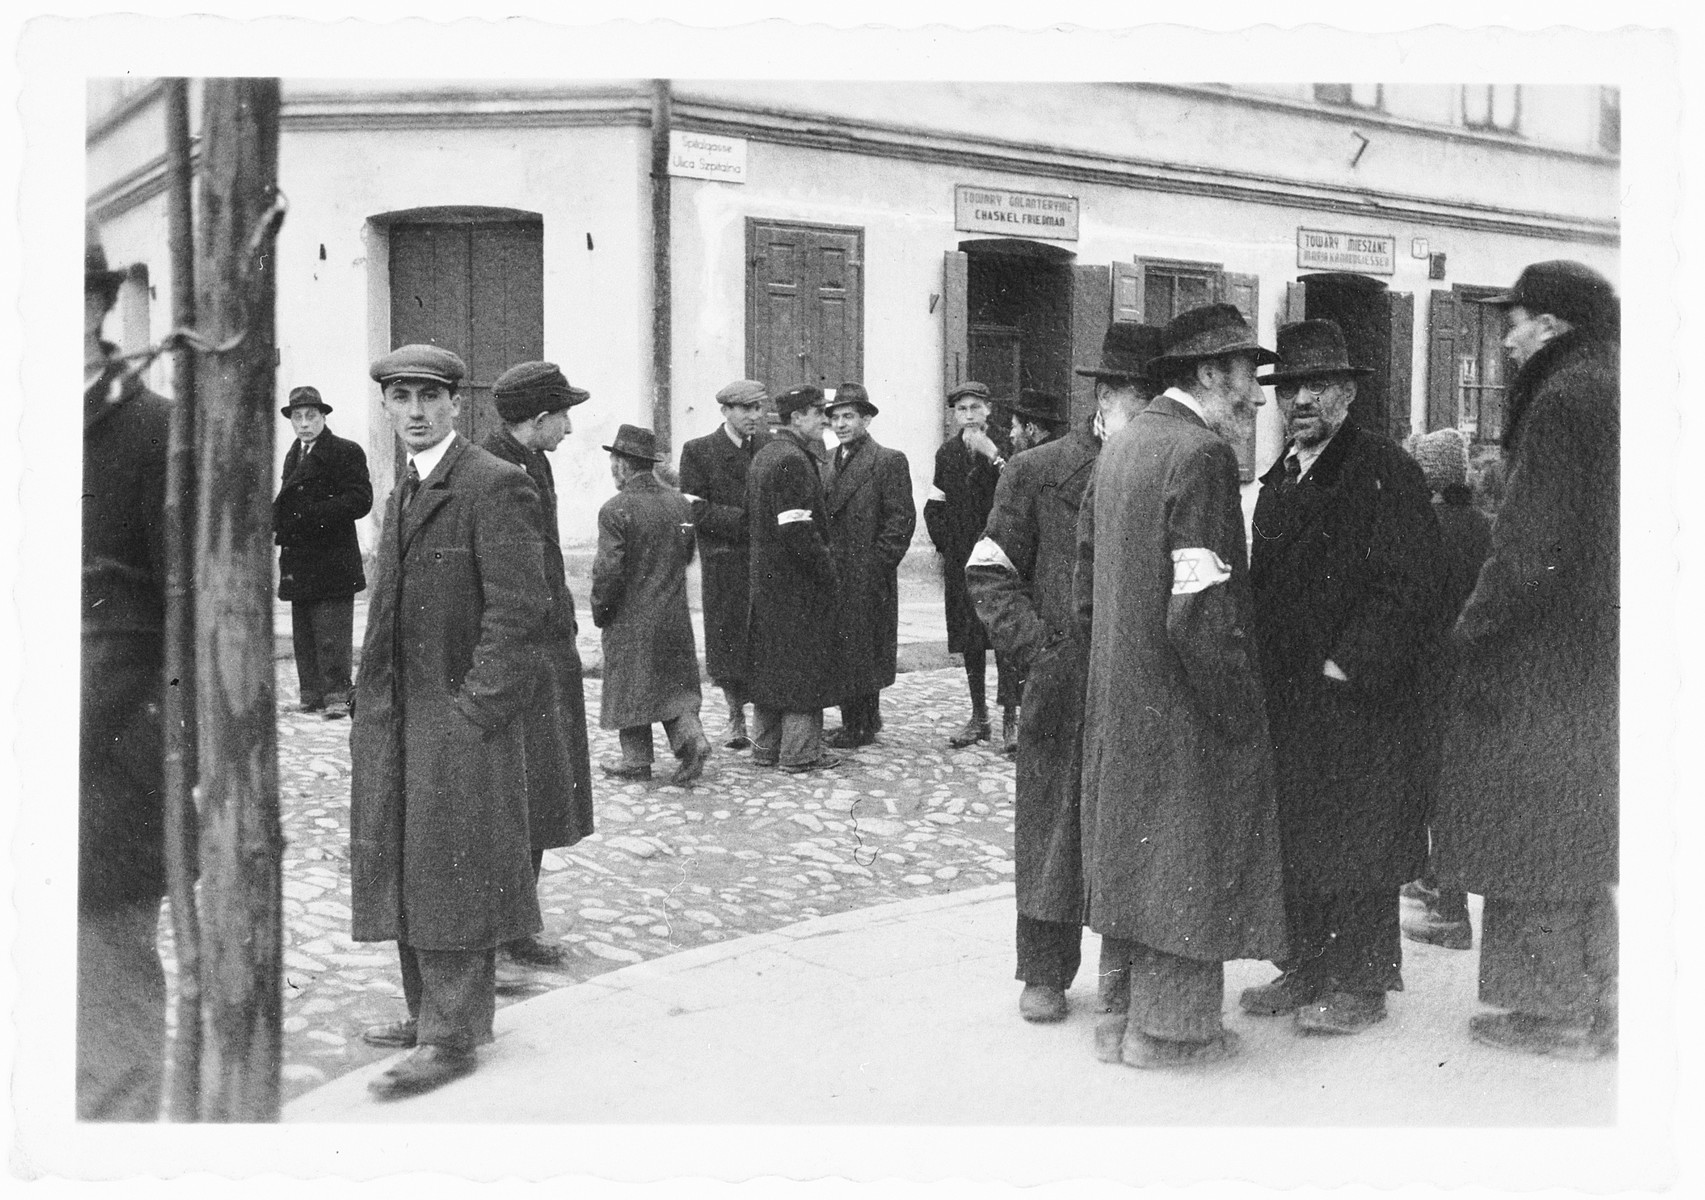 Polish Jews stand on a street corner of the [possibly Nowy Sacz] ghetto.